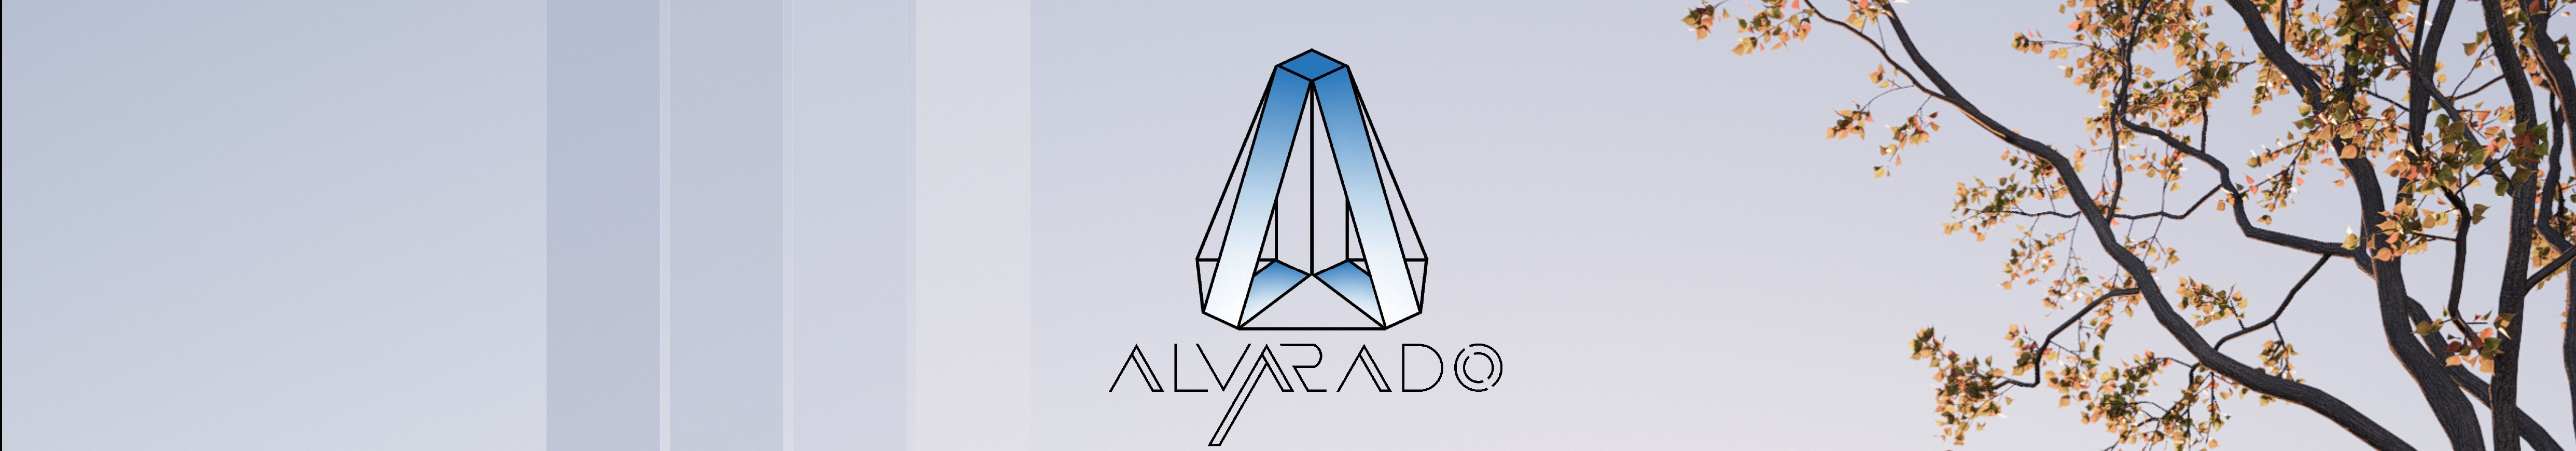 Banner profilu uživatele JEFERSON ALVARADO